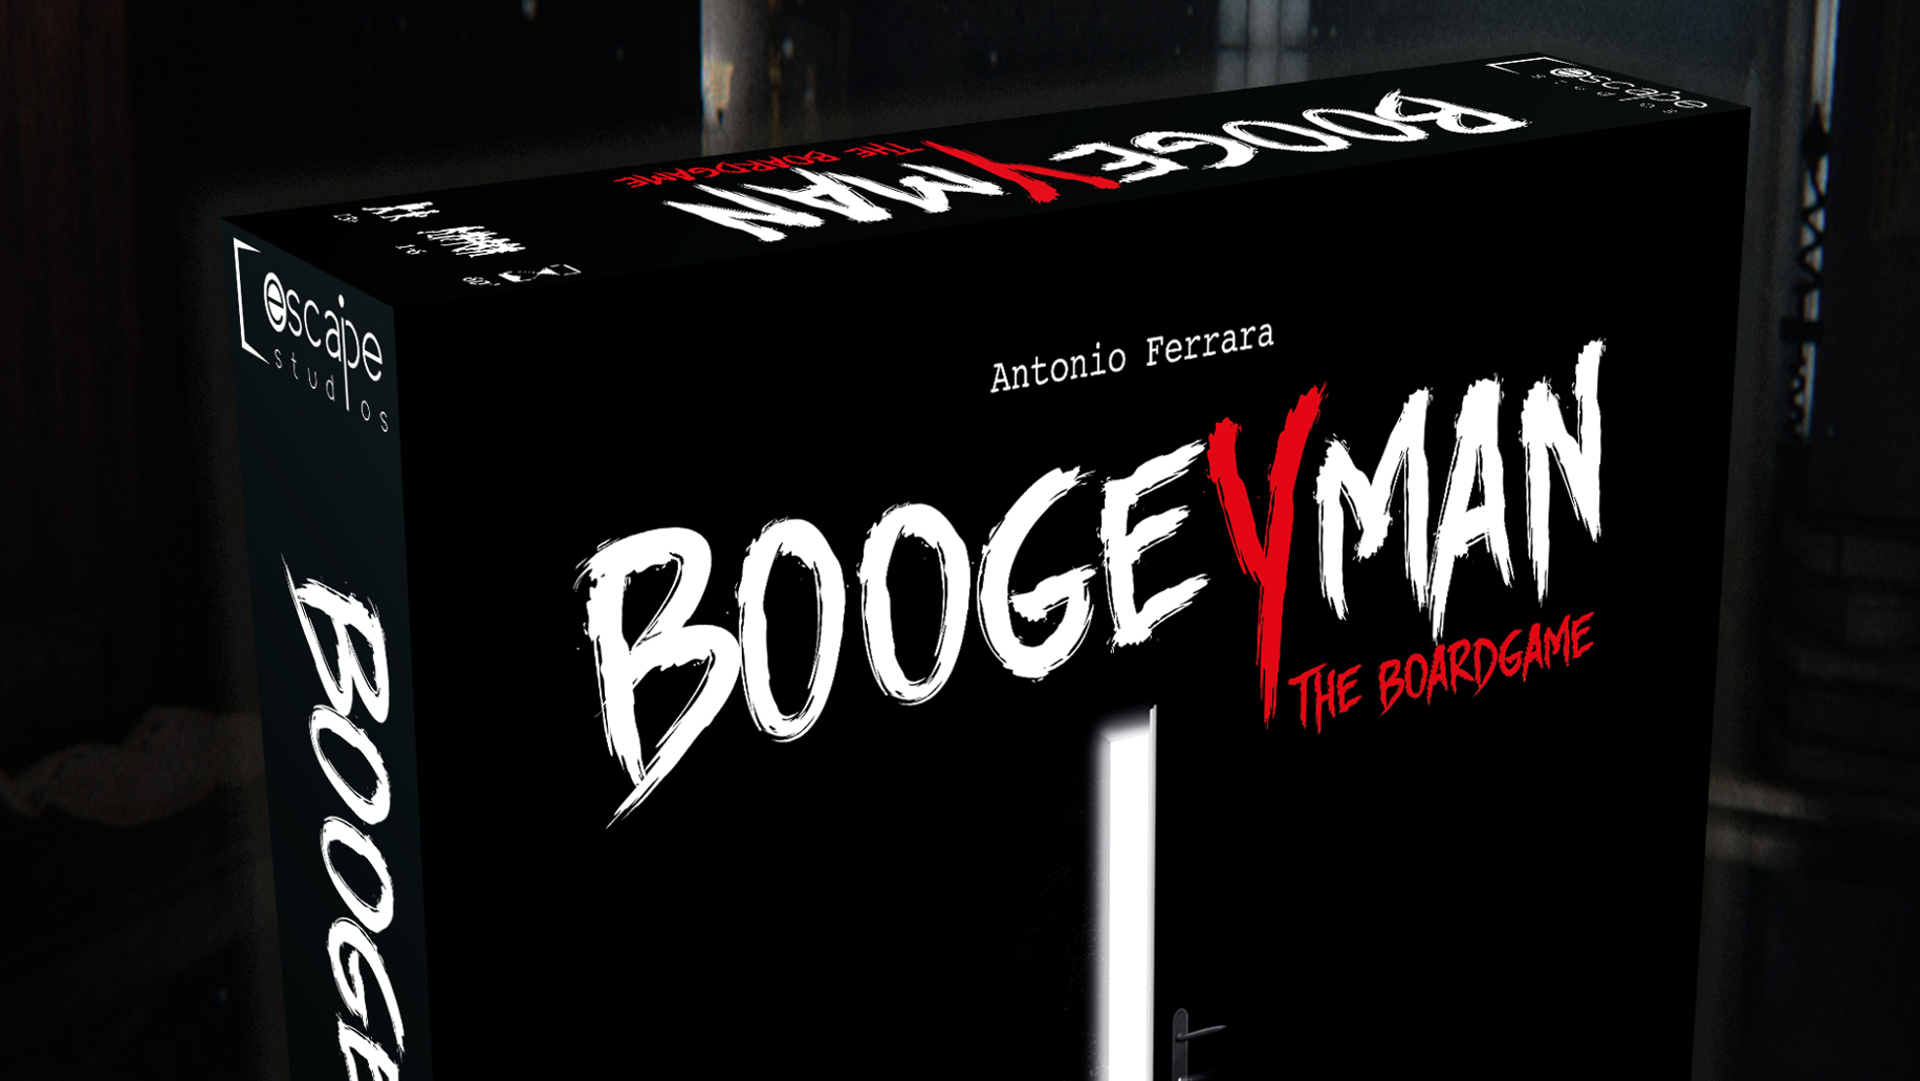 boogeyman